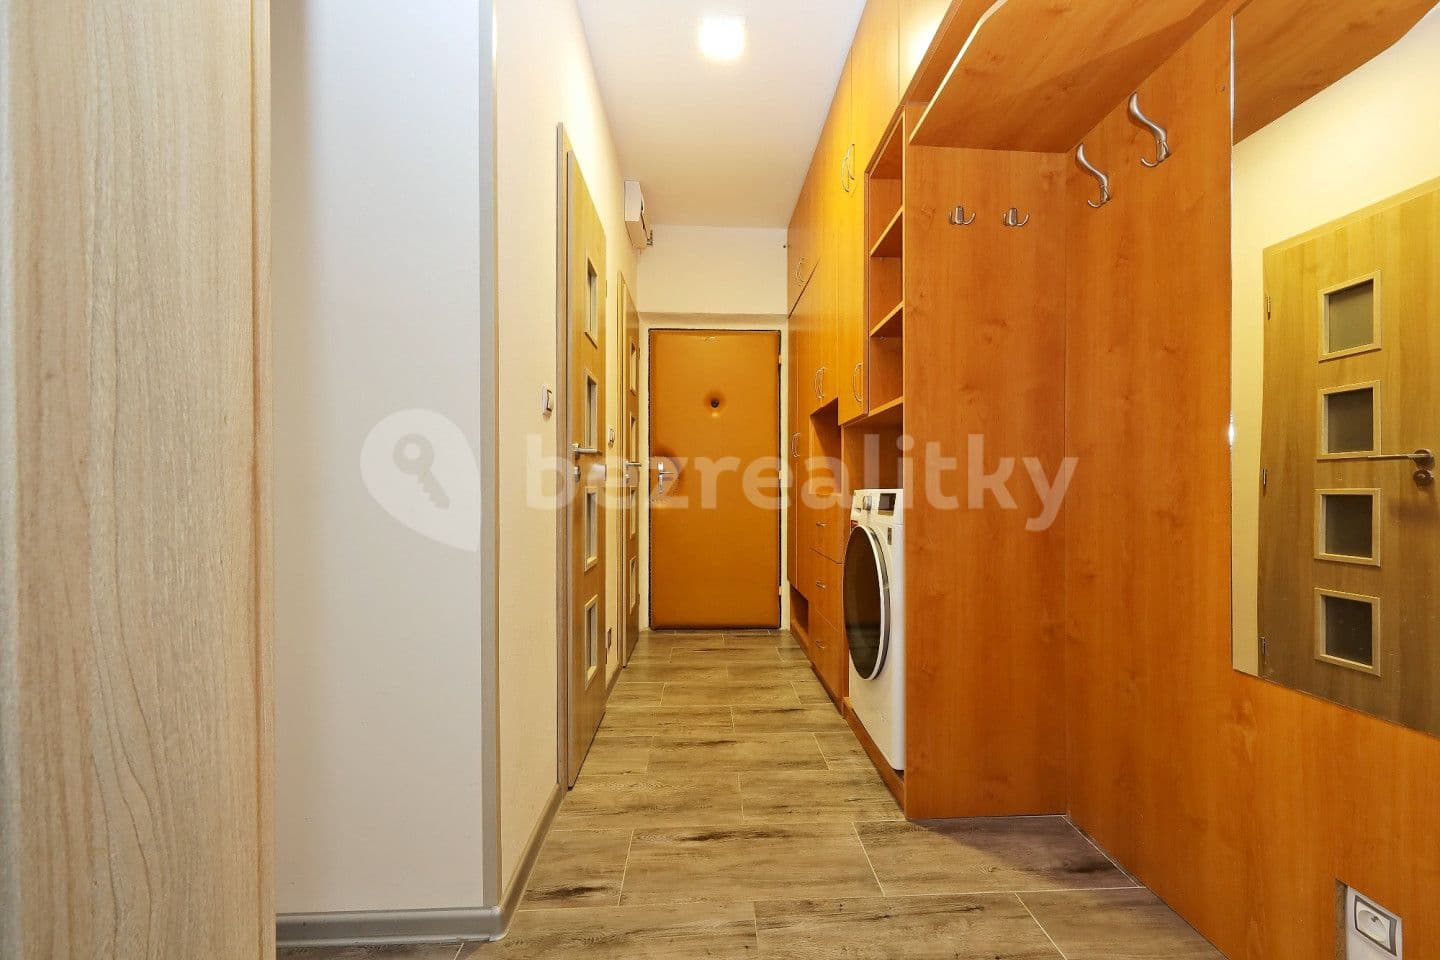 2 bedroom flat for sale, 55 m², U Hřbitova, Jihlava, Vysočina Region